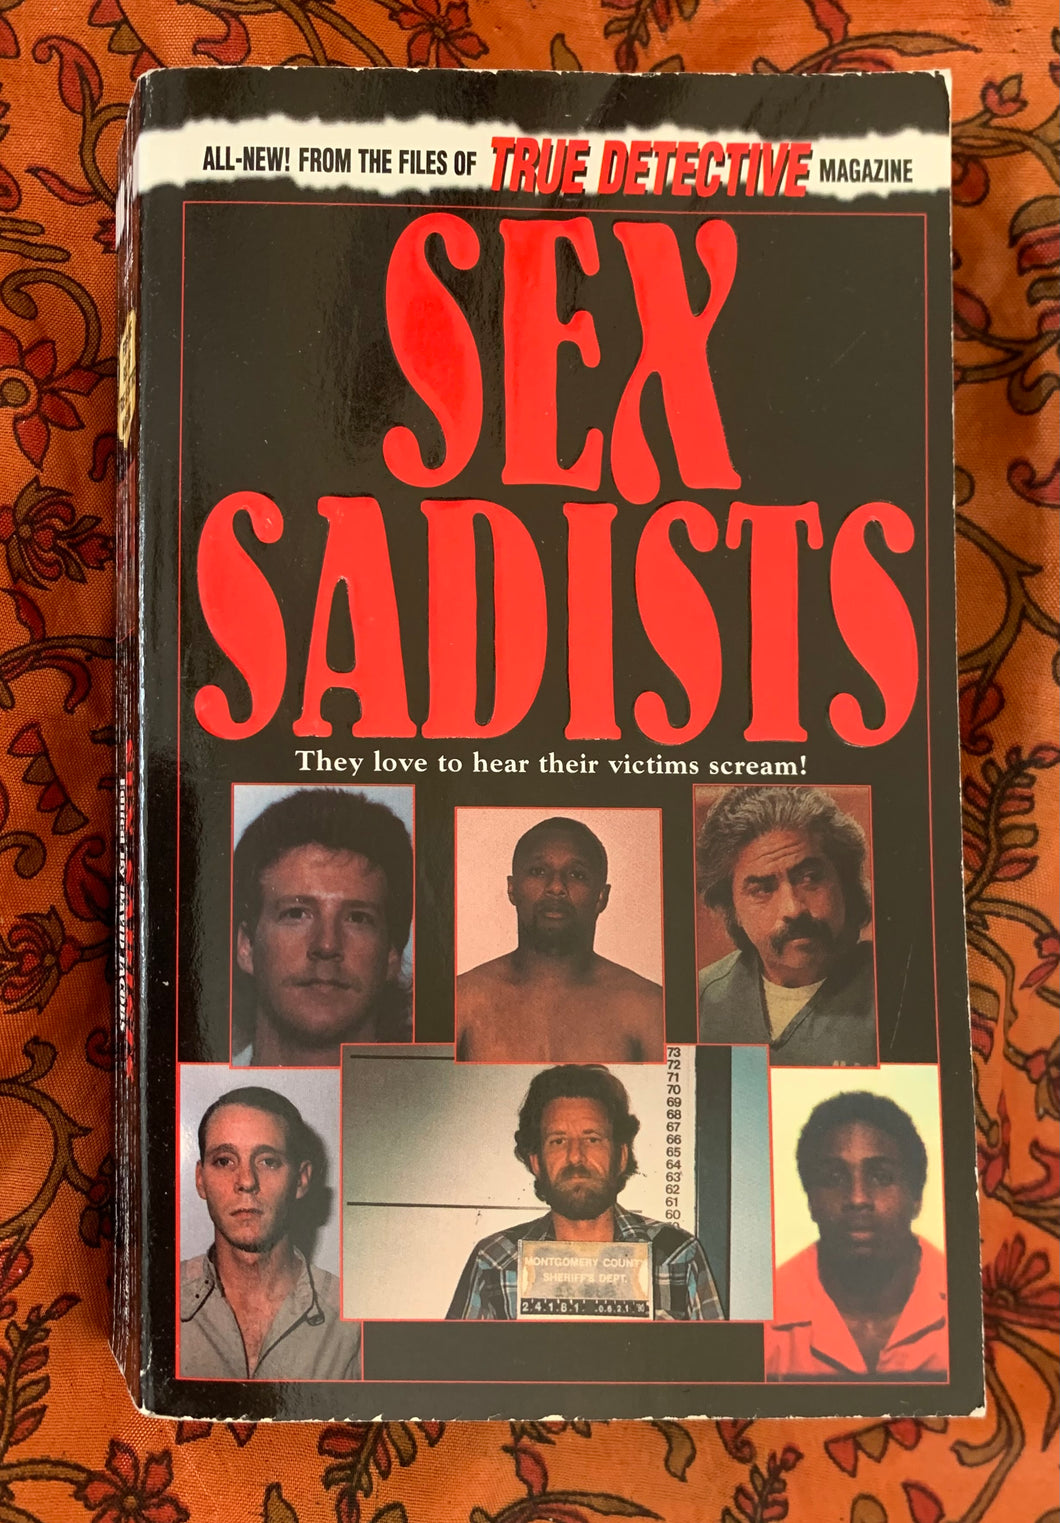 Sex Sadists